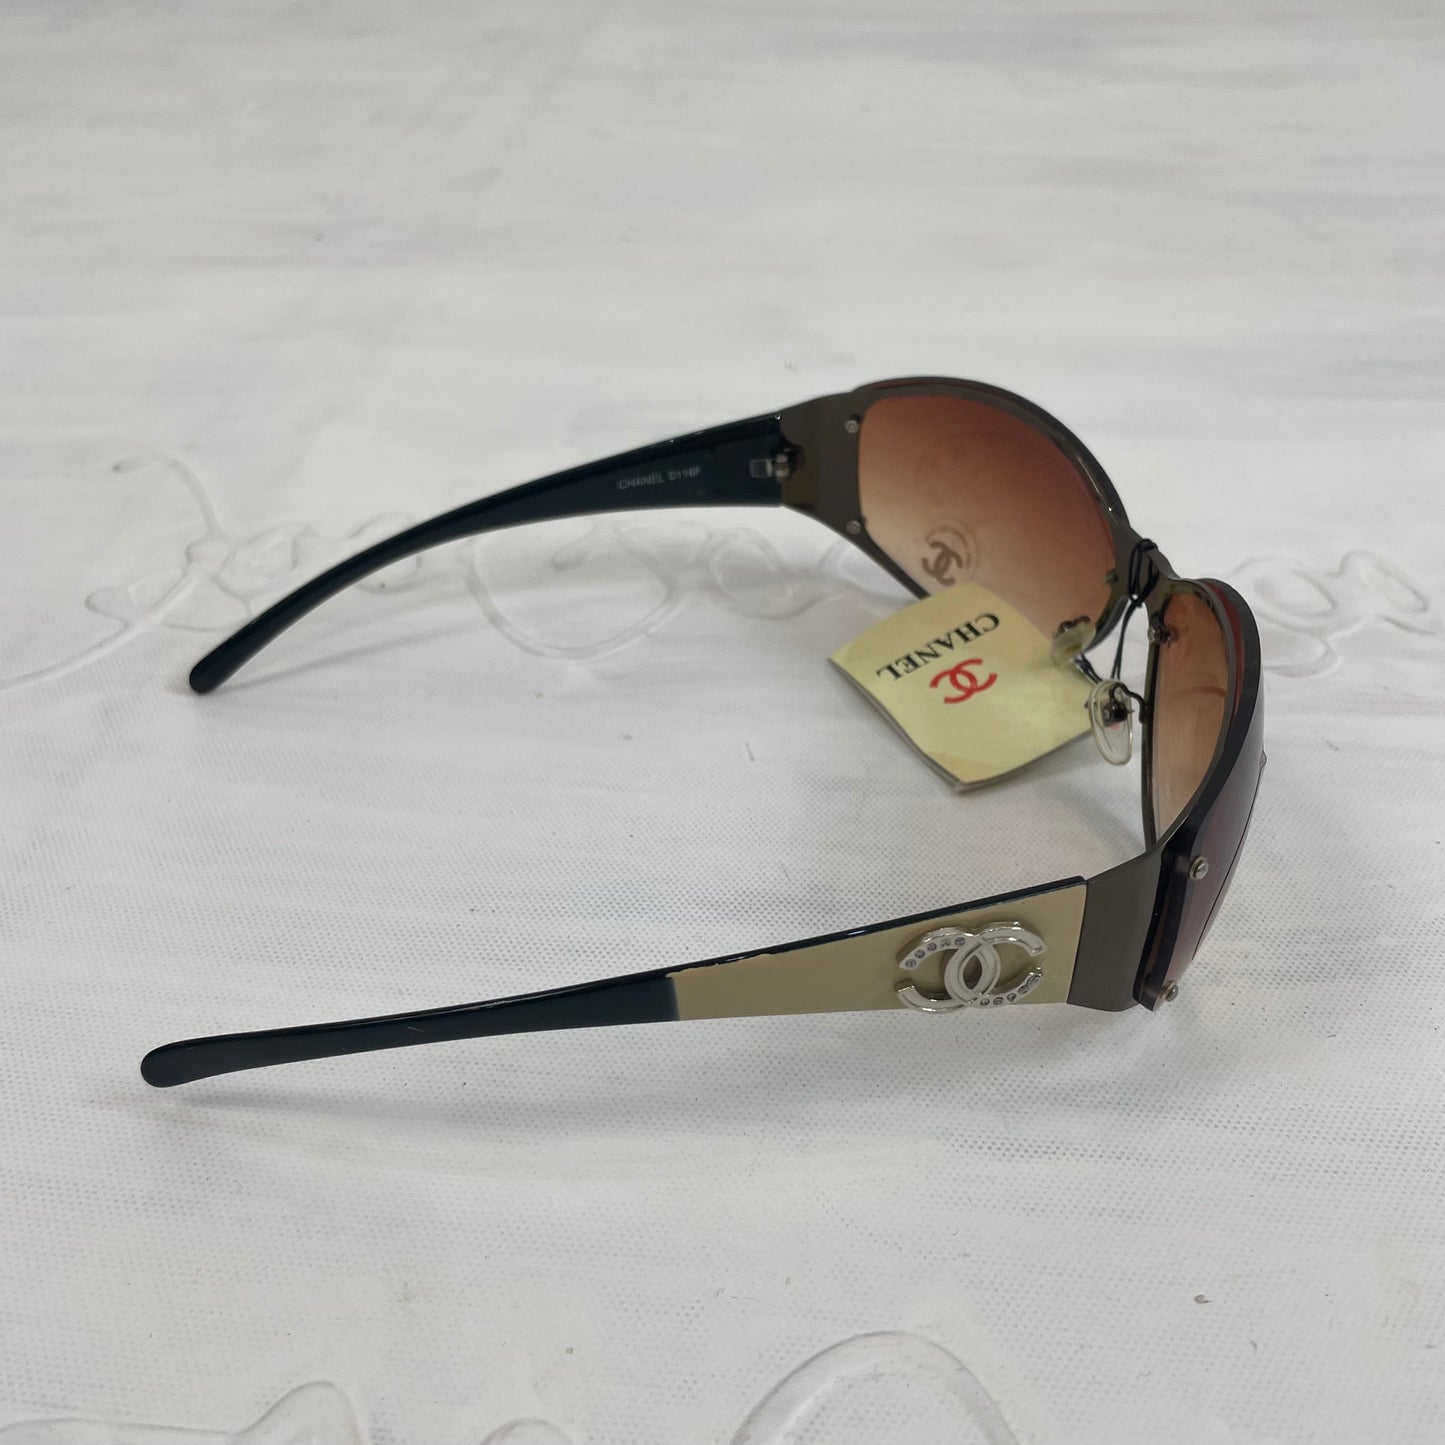 PARIS HILTON DROP | brown chanel style sunglasses with cream sides